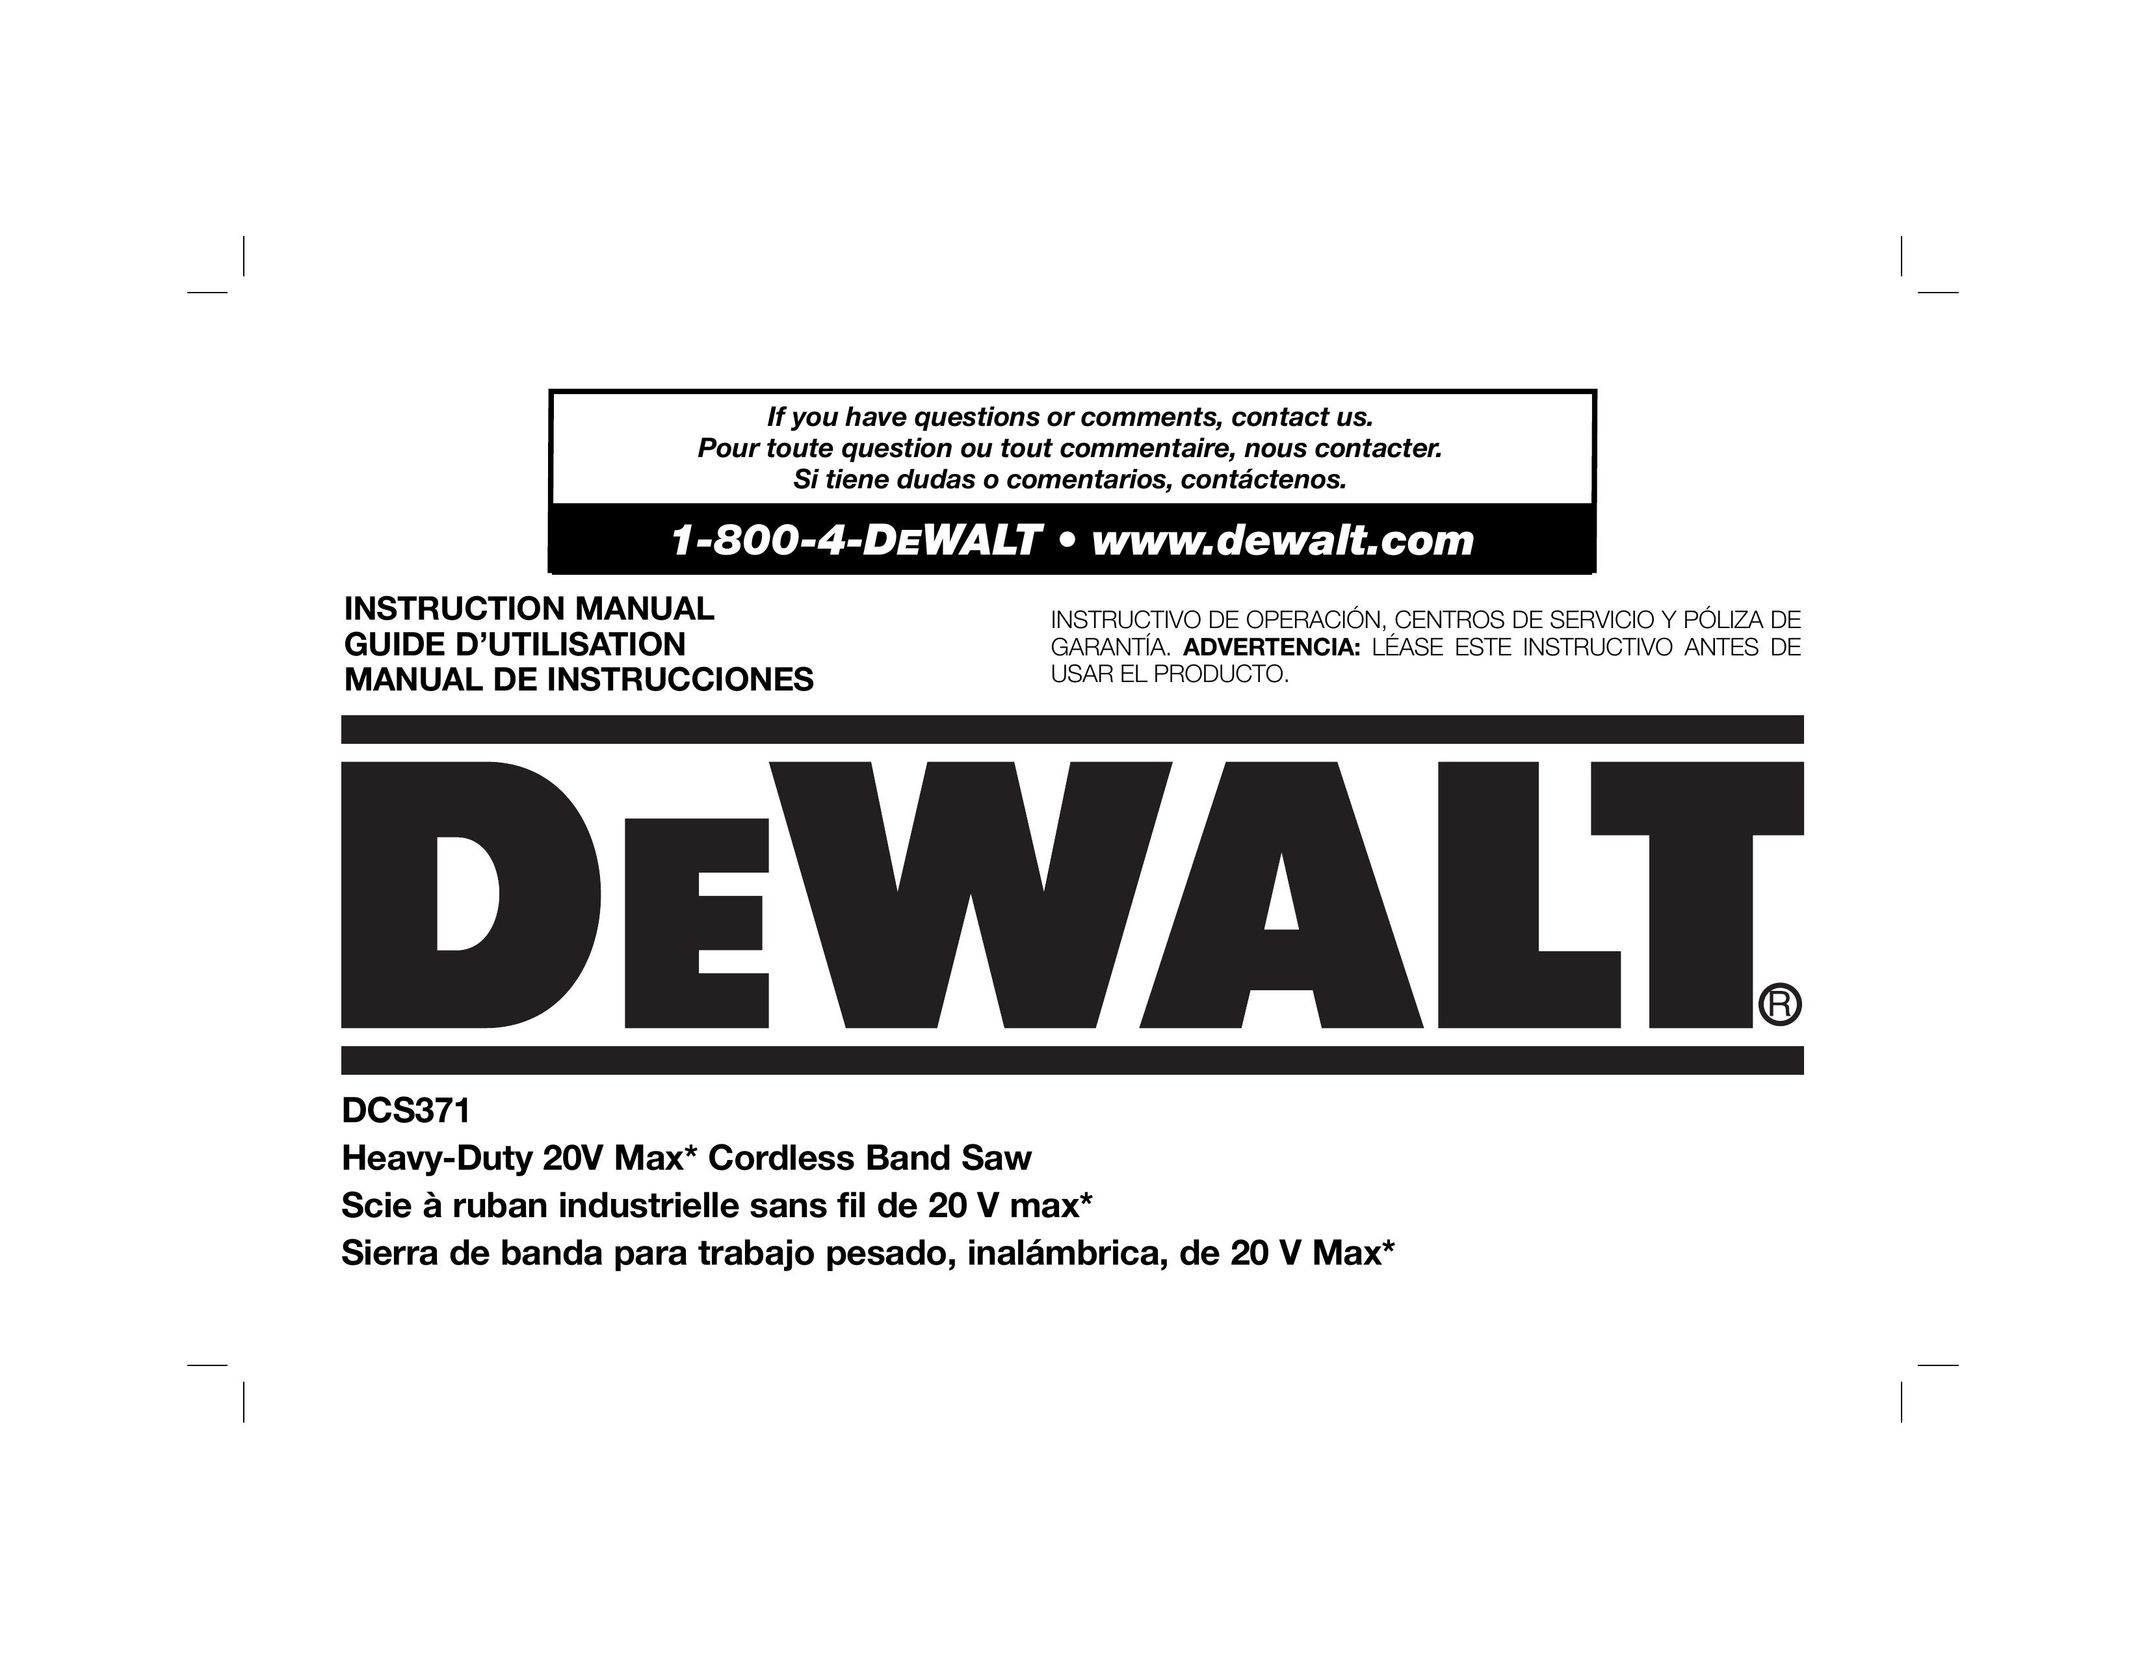 DeWalt DCS371 Cordless Saw User Manual